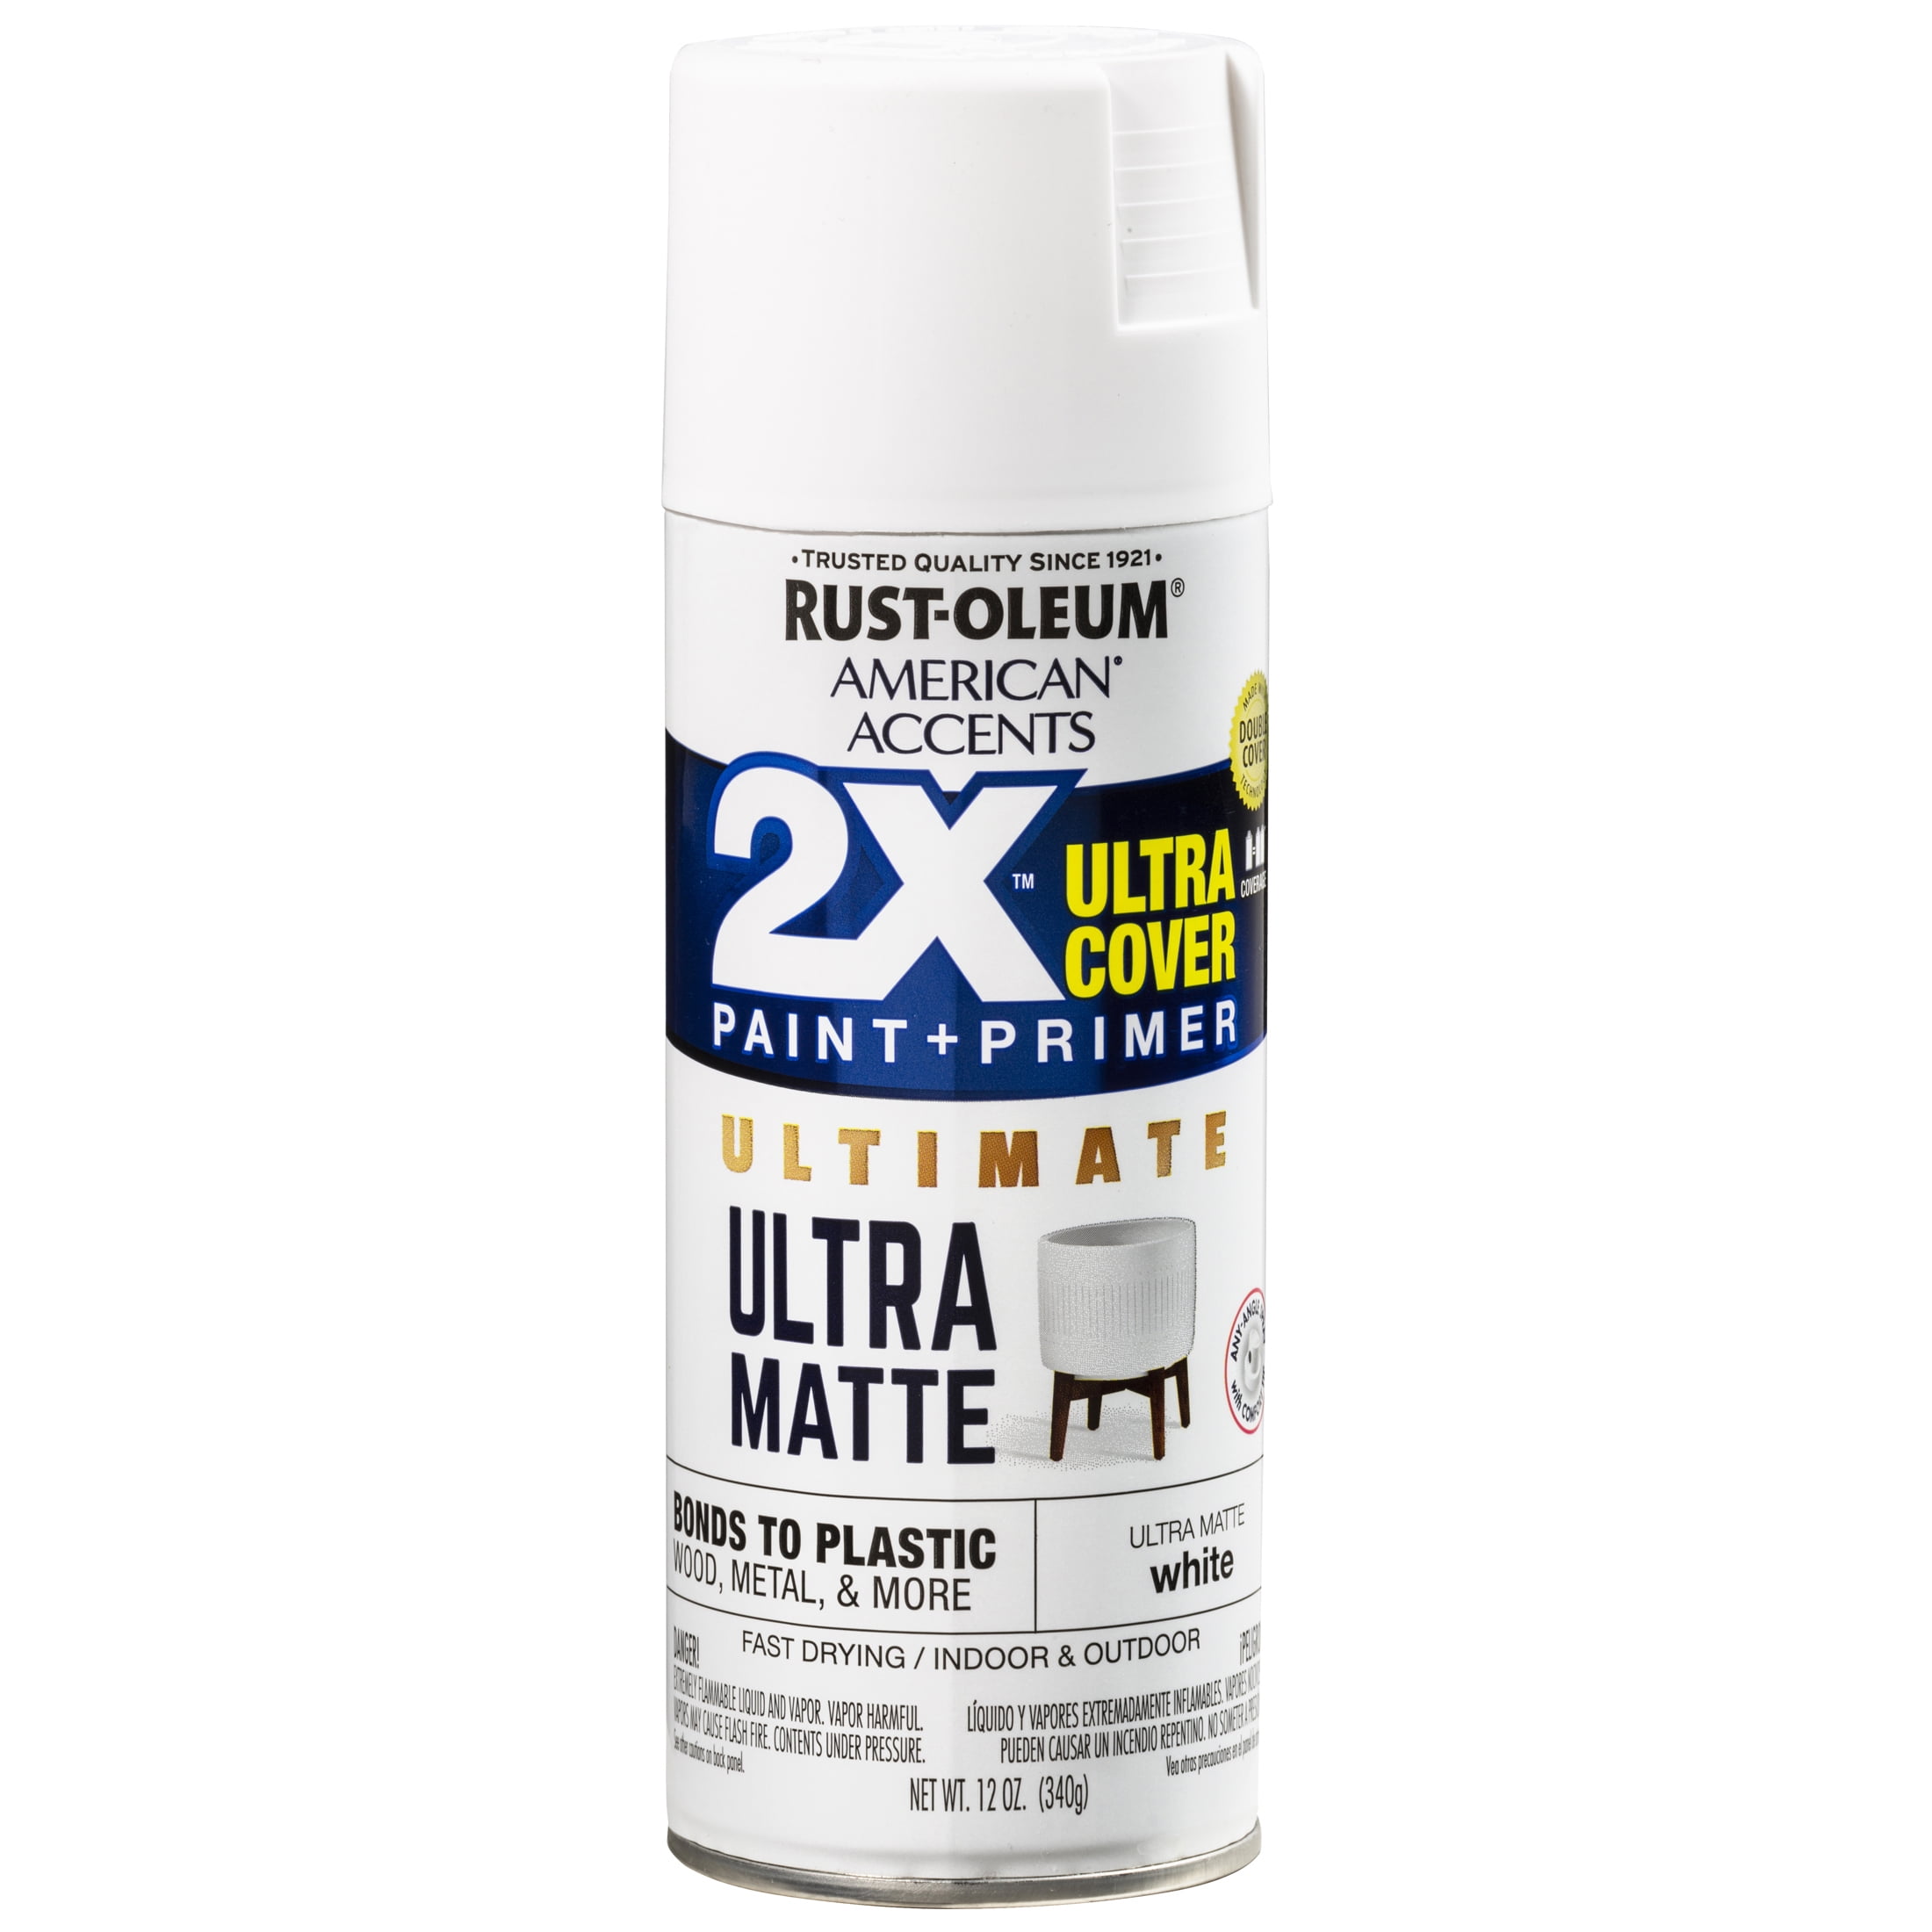 White, Rust-Oleum American Accents 2X Ultra Cover Ultra Matte